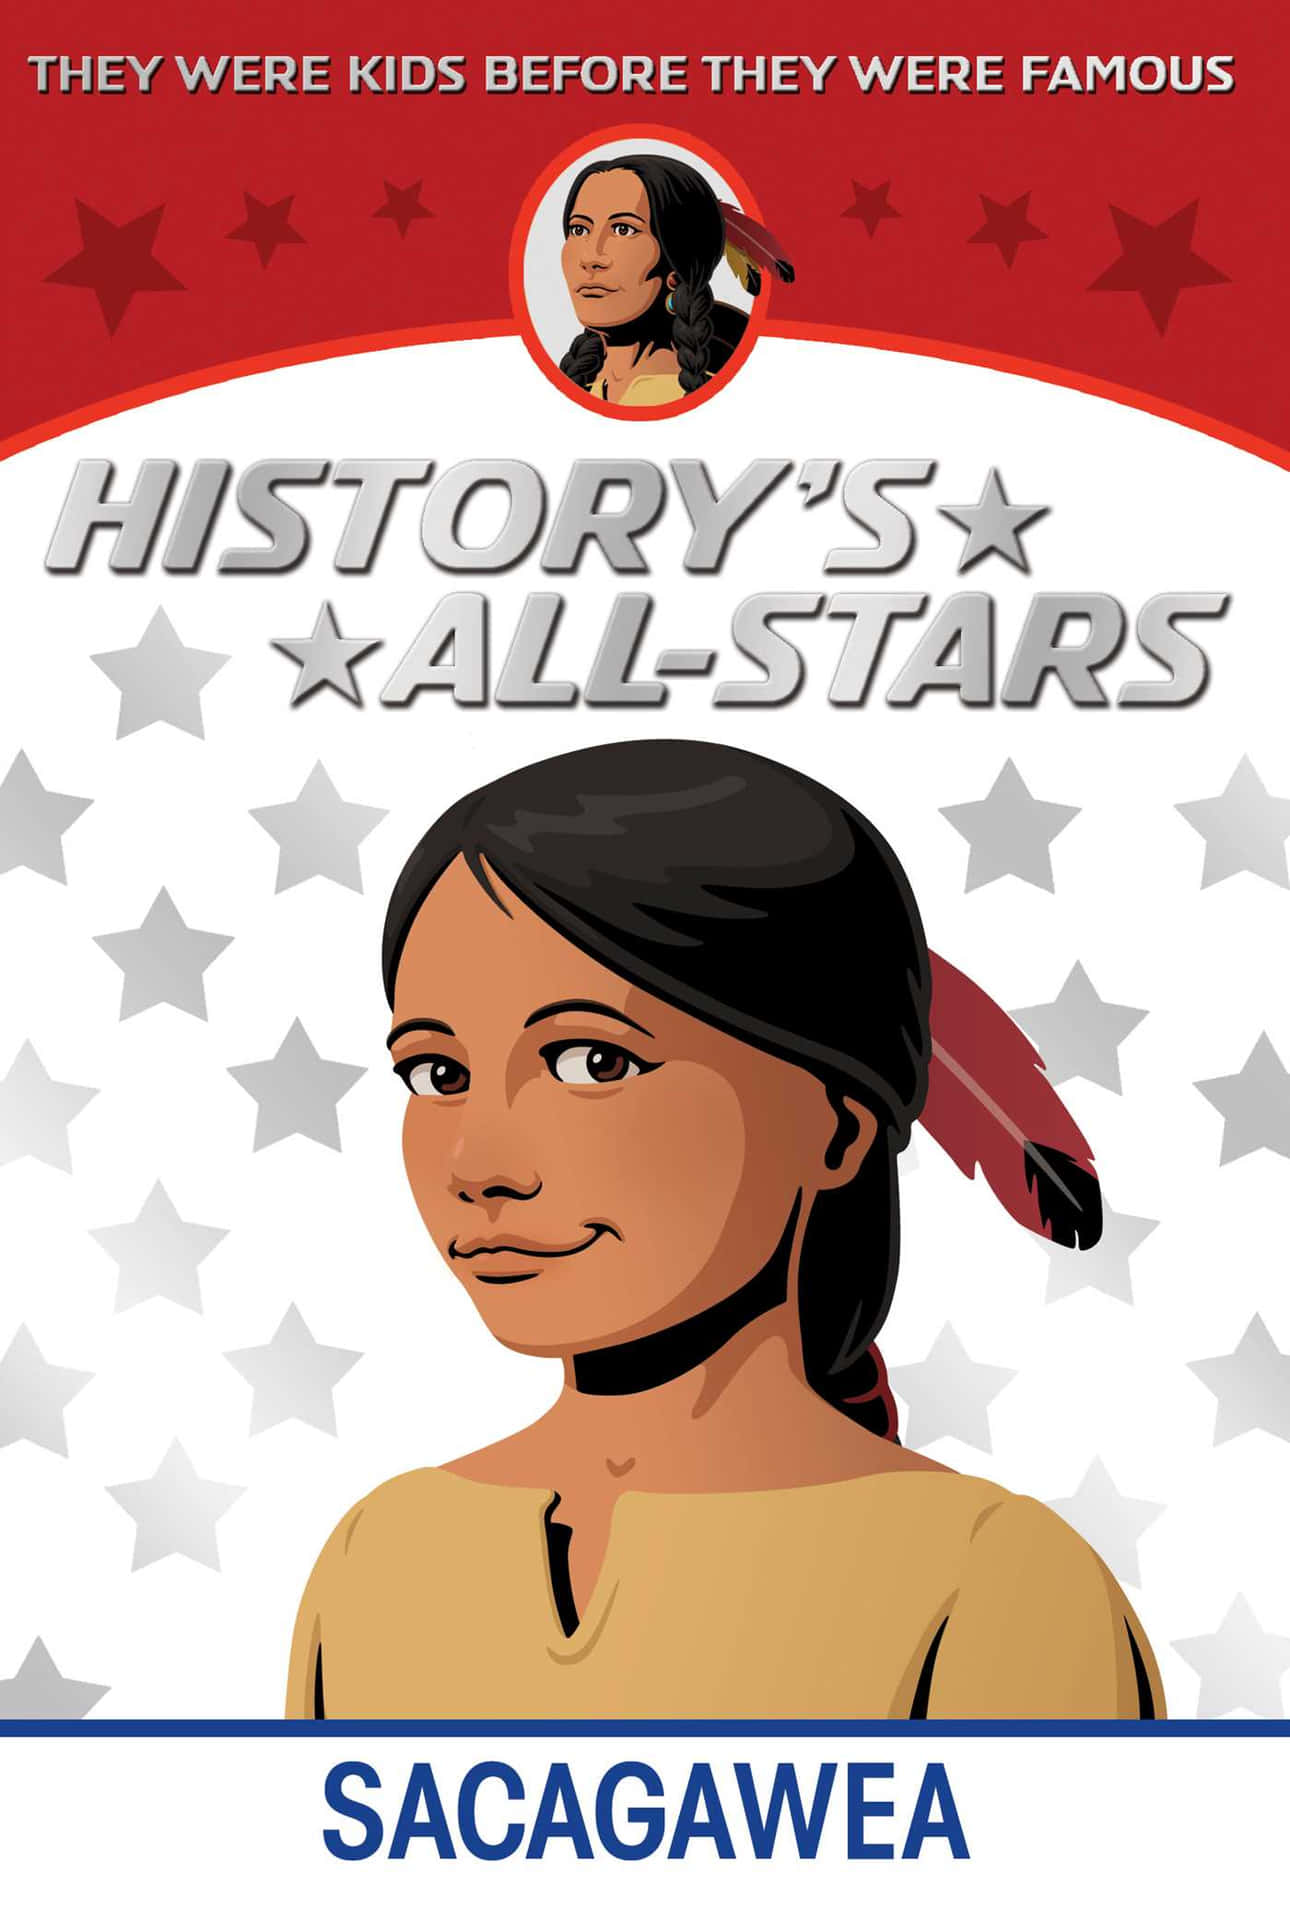 Sacagawea, a Native American heroine